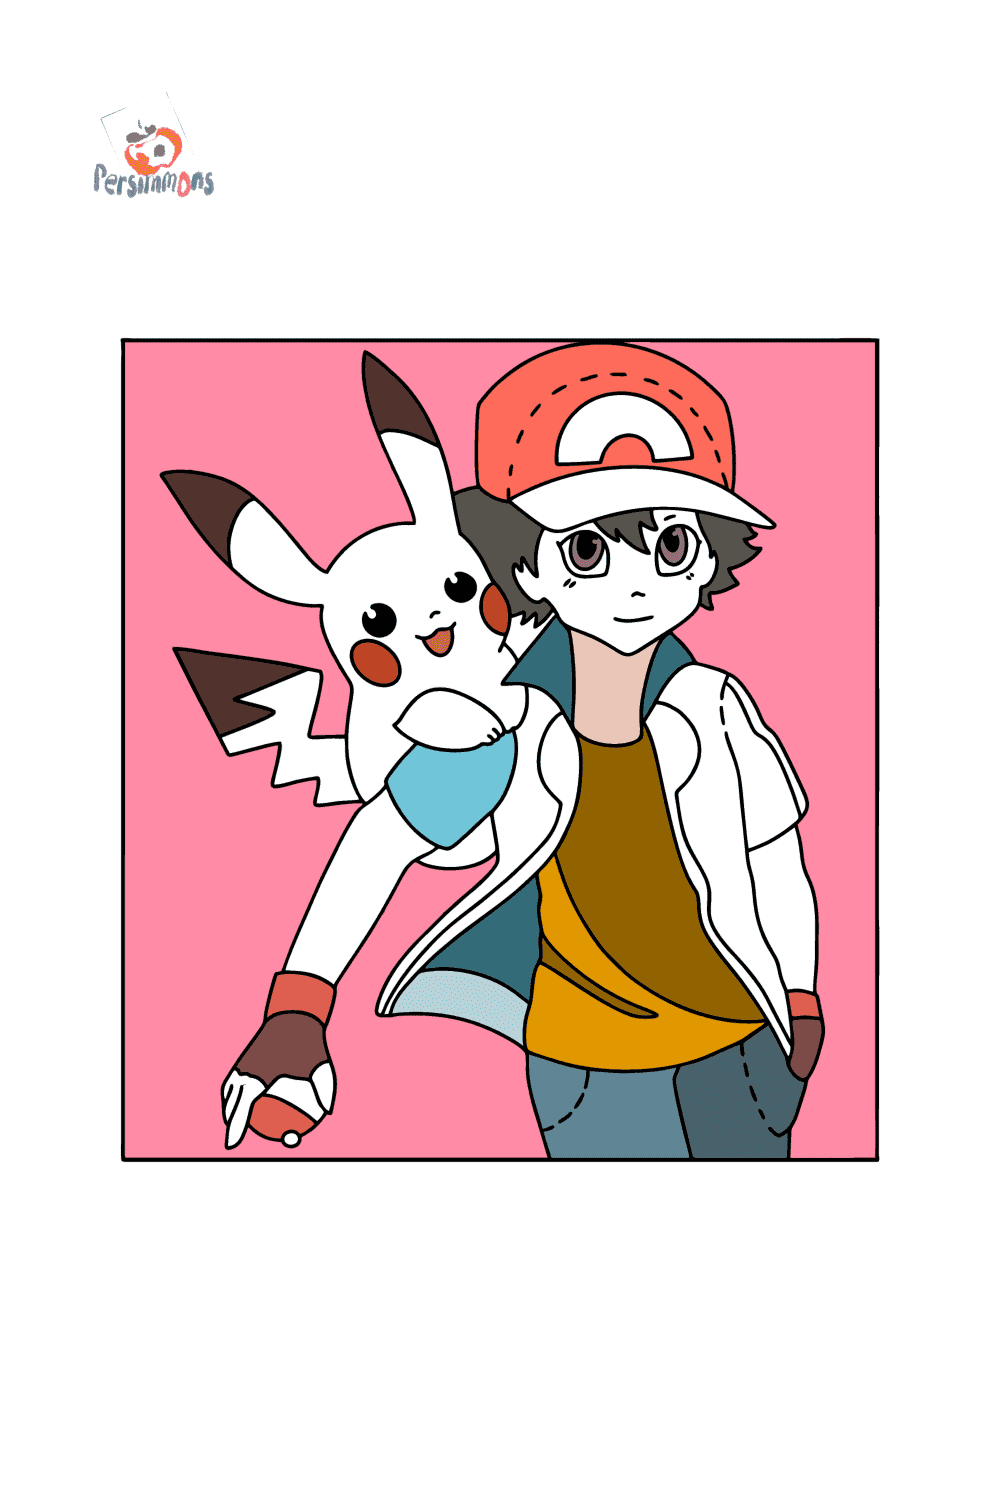 30+ Desenhos Pokémon XY para colorir